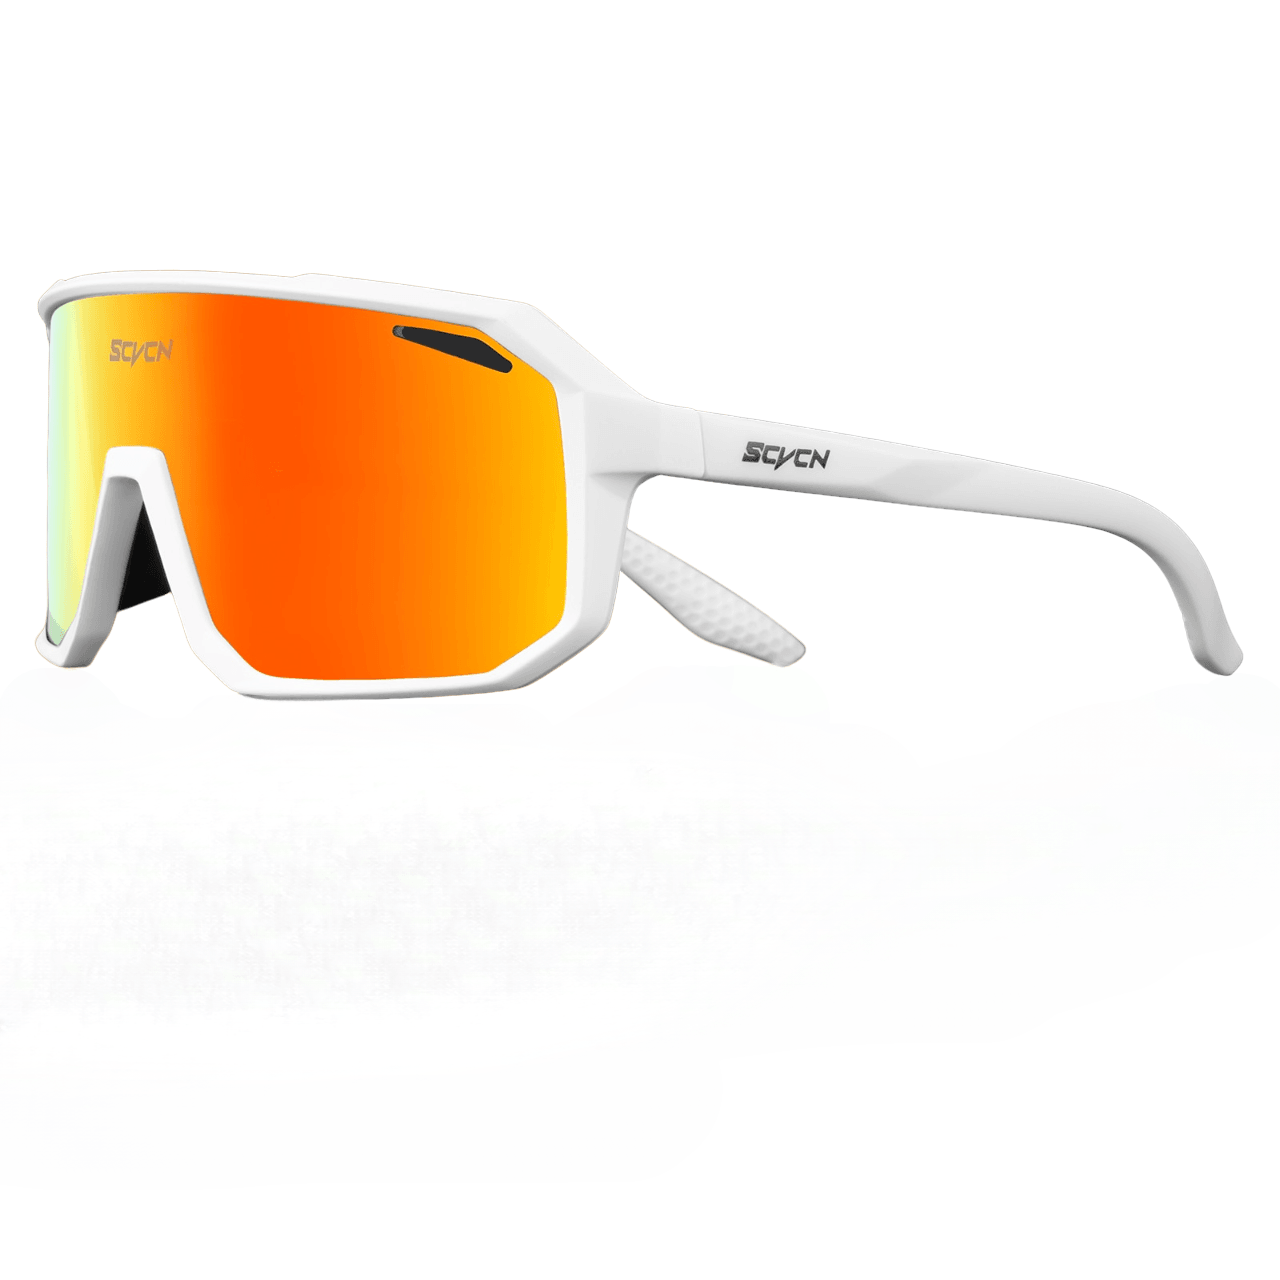 Raptor Sport Cycling Sunglasses - Rad Sunnies